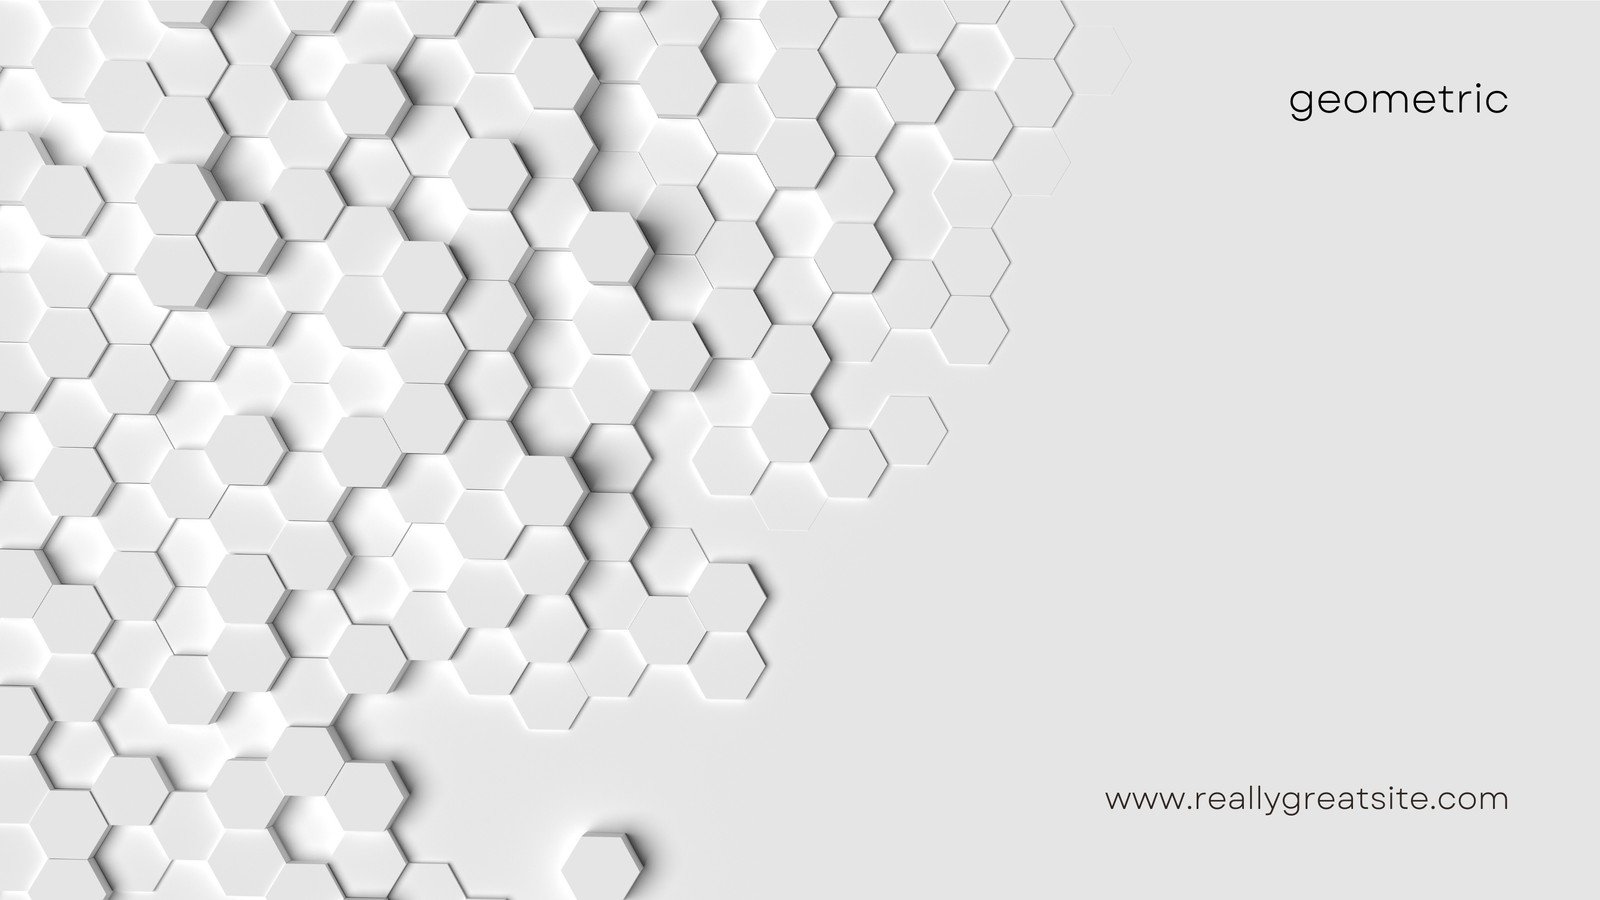 Free customizable geometric desktop wallpaper templates | Canva